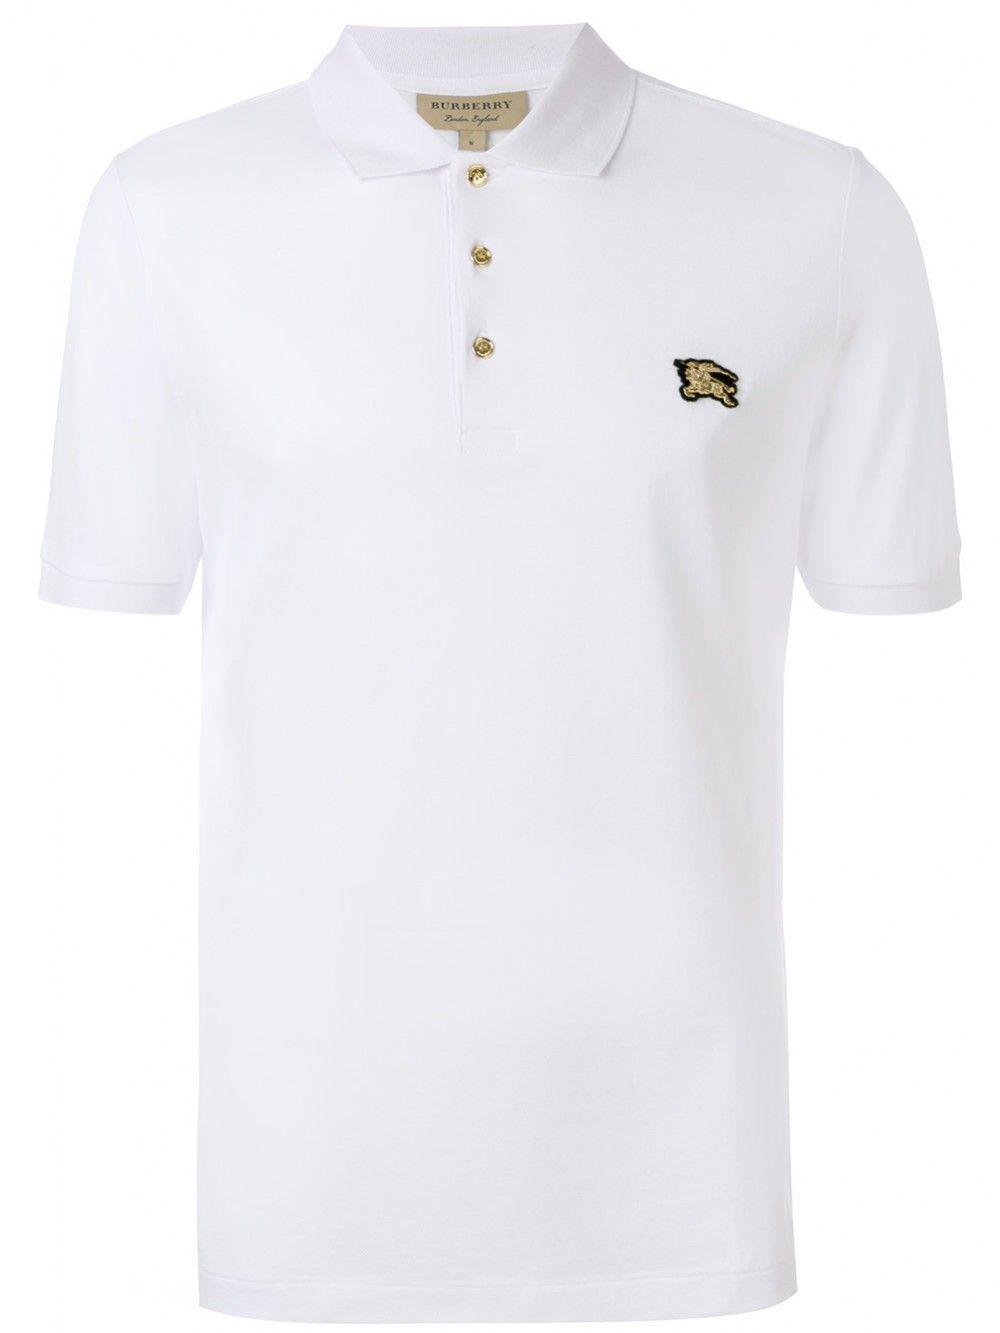 Gold Polo Logo - Burberry Embroidered Logo Polo Shirt $228 | LHO.